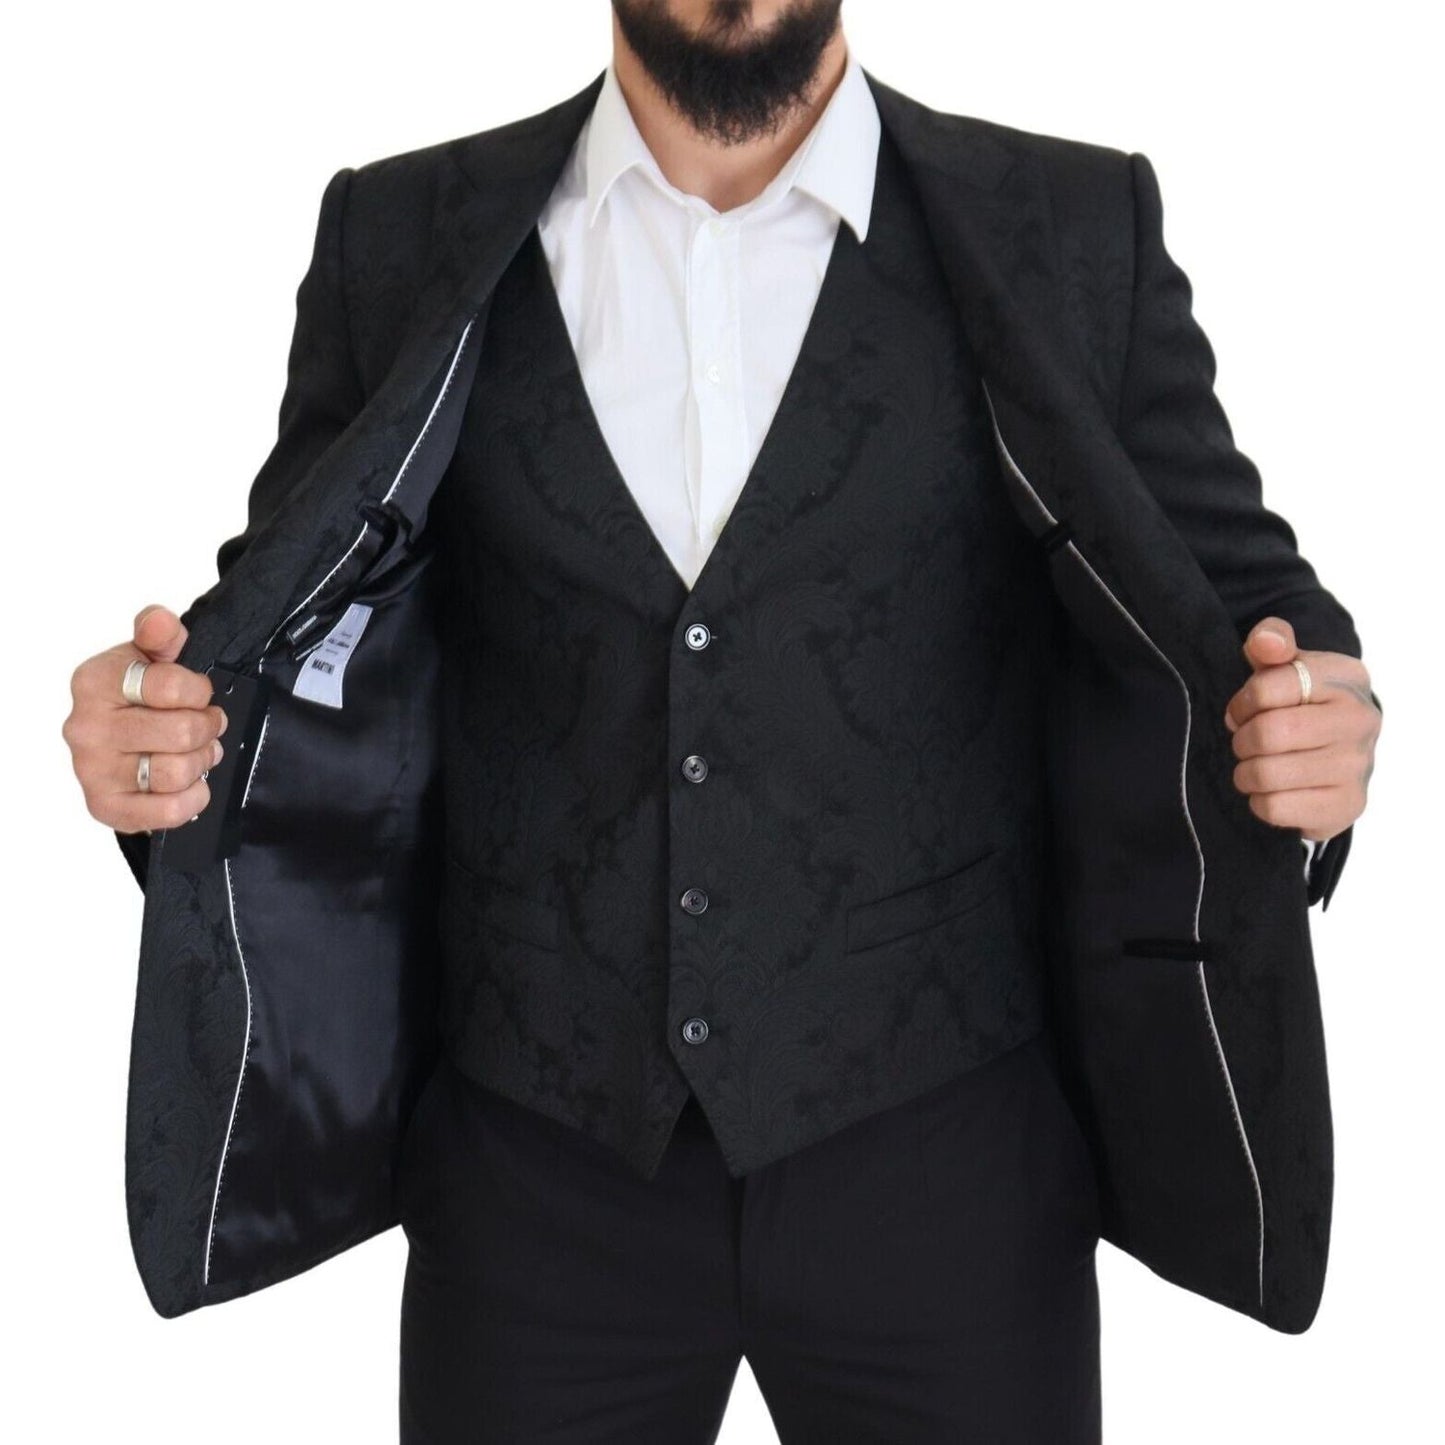 Dolce & Gabbana Elegant Black Martini Suit Jacket & Vest Ensemble black-floral-brocade-2-piece-martini-suit